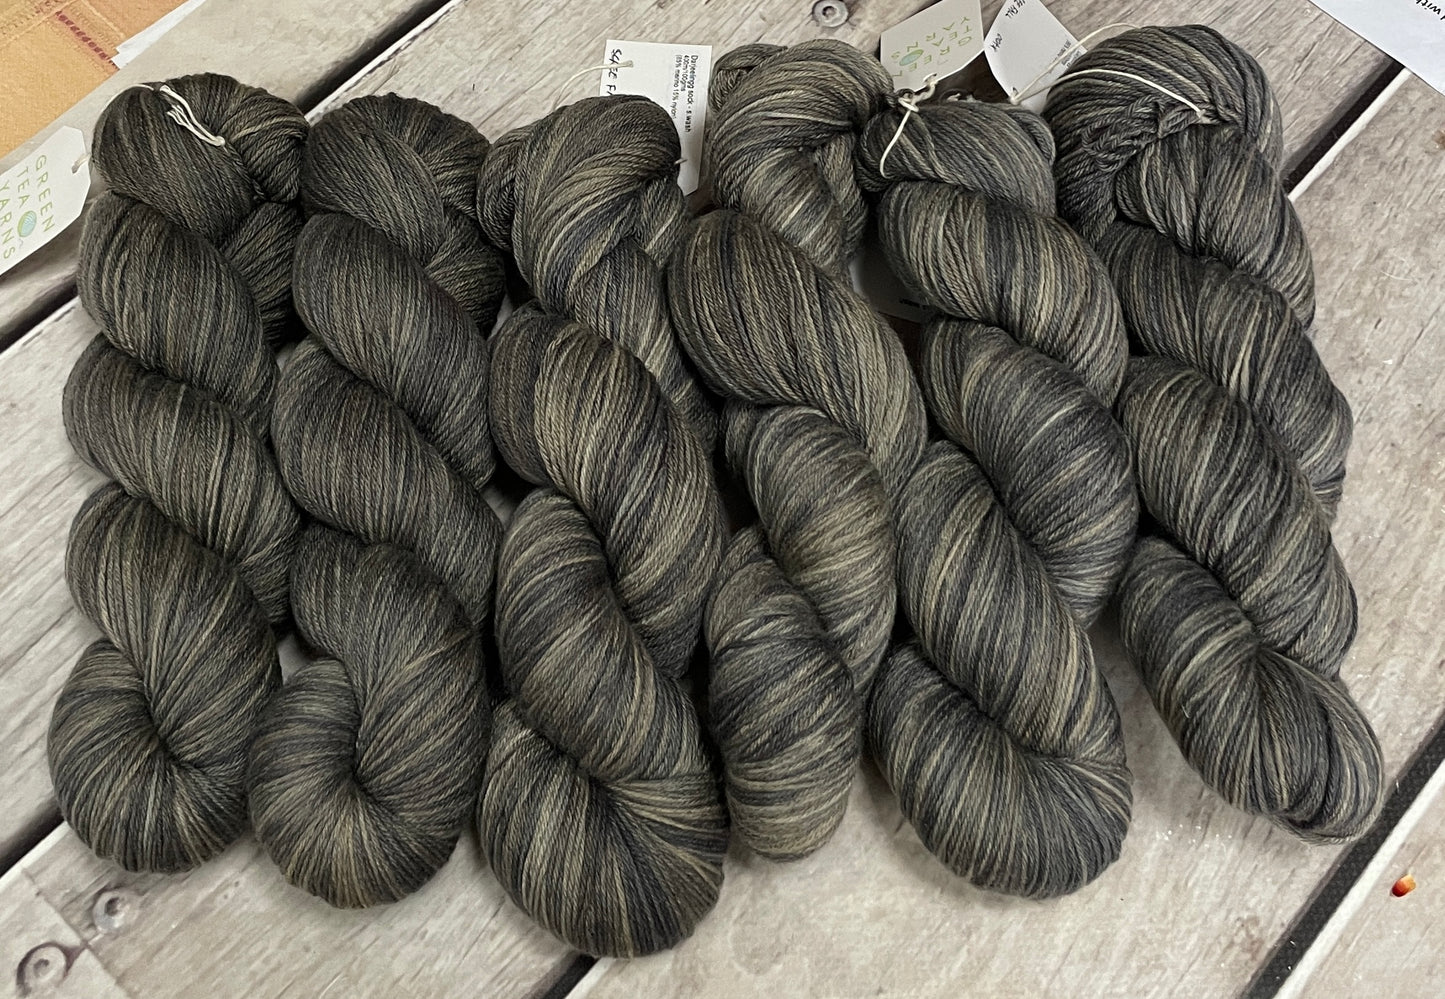 Scree Fall ooak - Darjeeling 4 ply sock yarn in merino and nylon